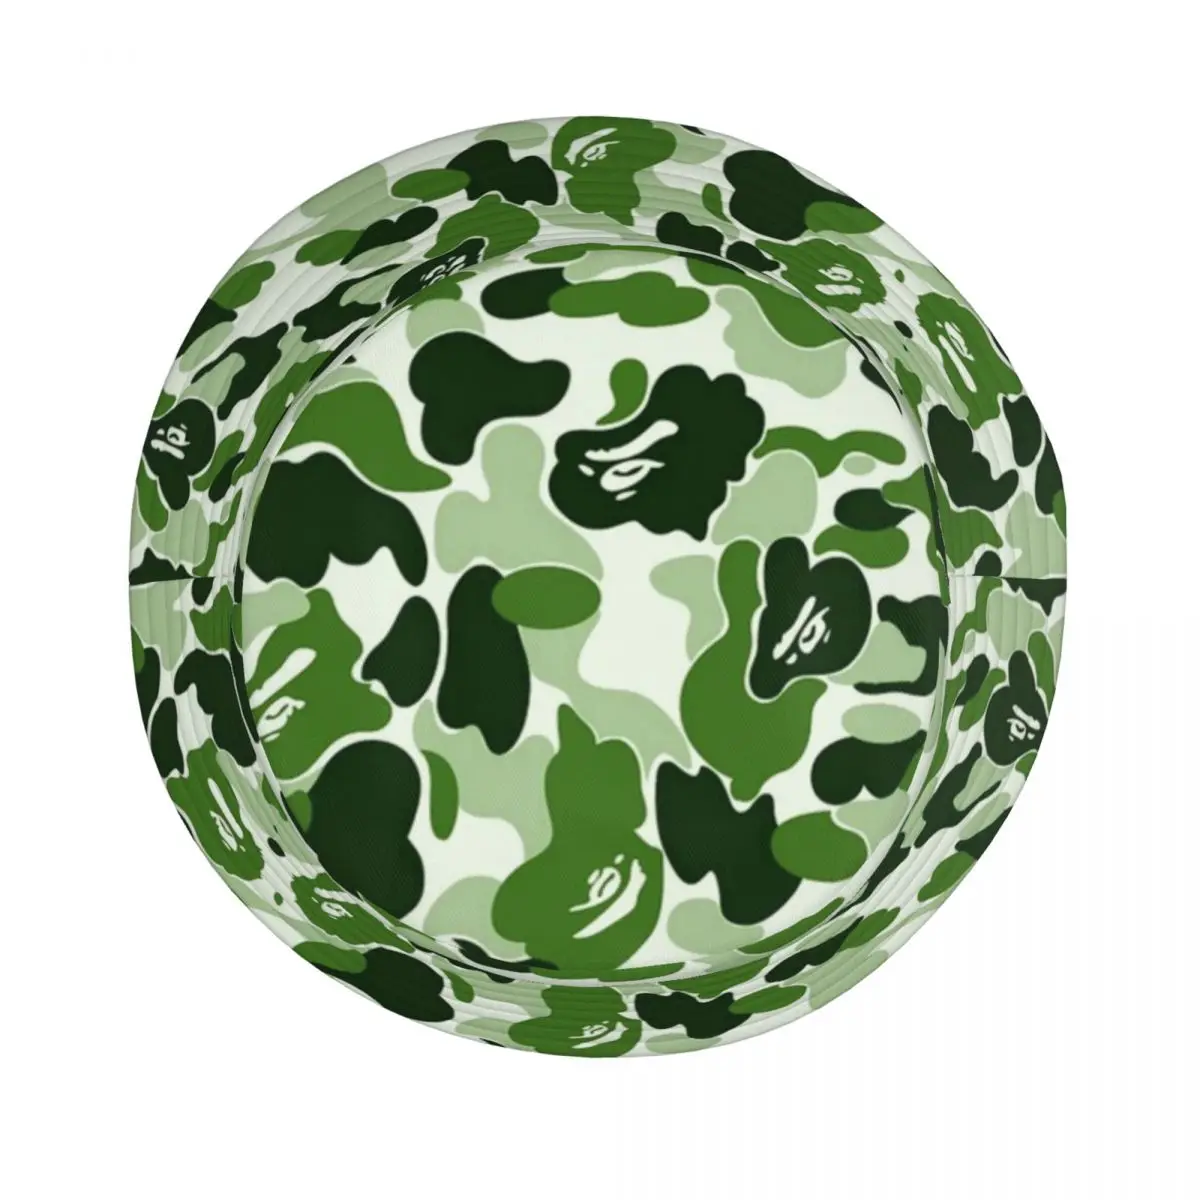  - Green Army Camouflage Bucket Hats Print Camo Design Pattern Summer Travel Beach Camo Bape Design Pattern Fisherman Cap